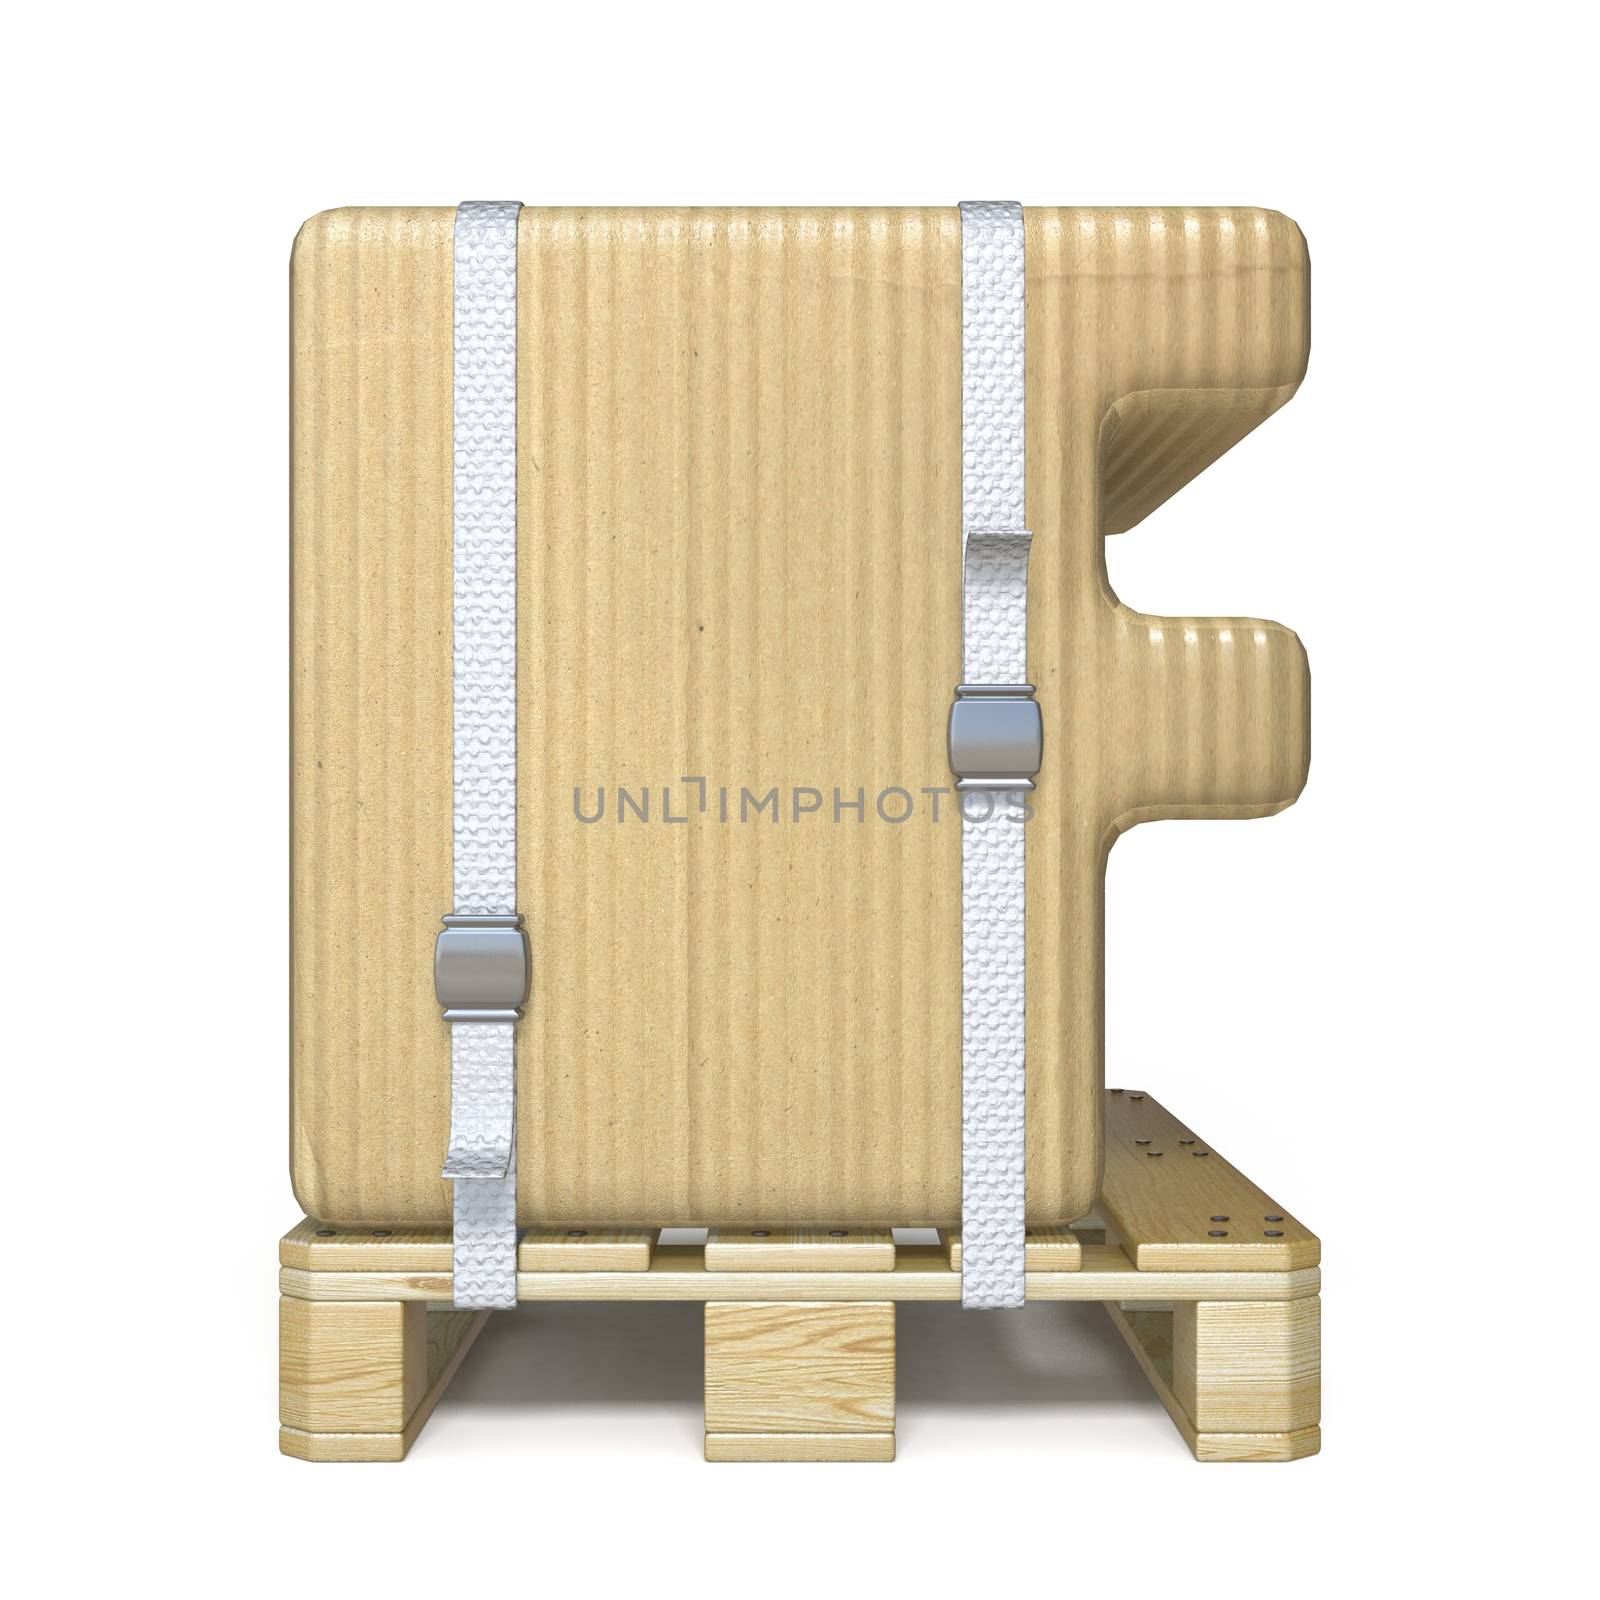 Cardboard box font Letter F on wooden pallet 3D render illustration isolated on white background